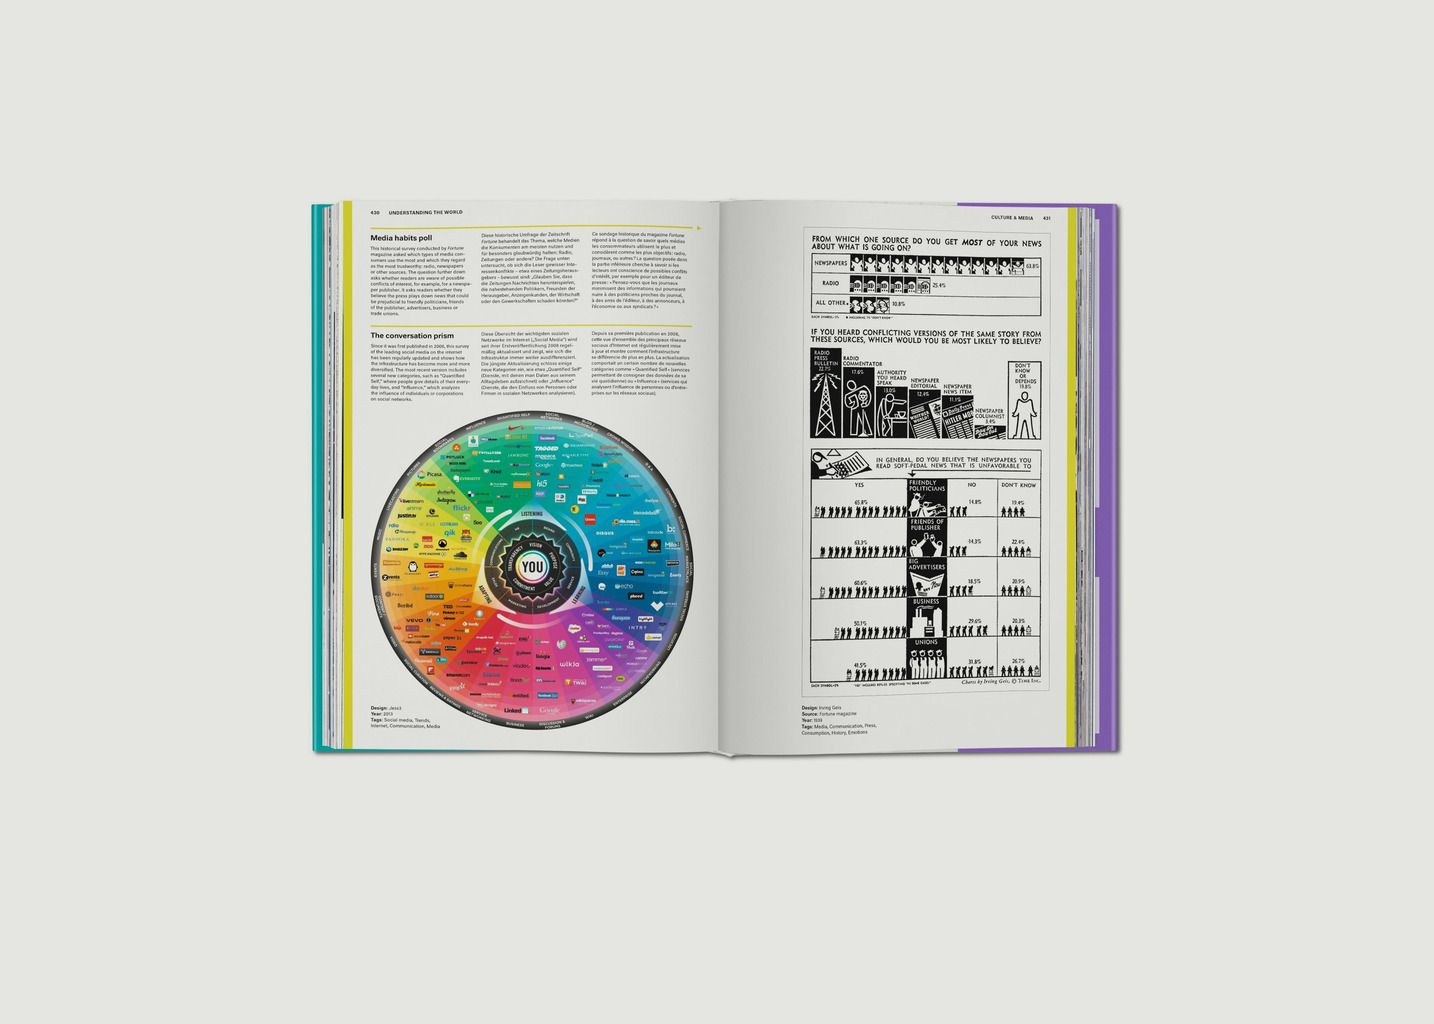 Livre Understanding the World. The Atlas of Infographics - Taschen